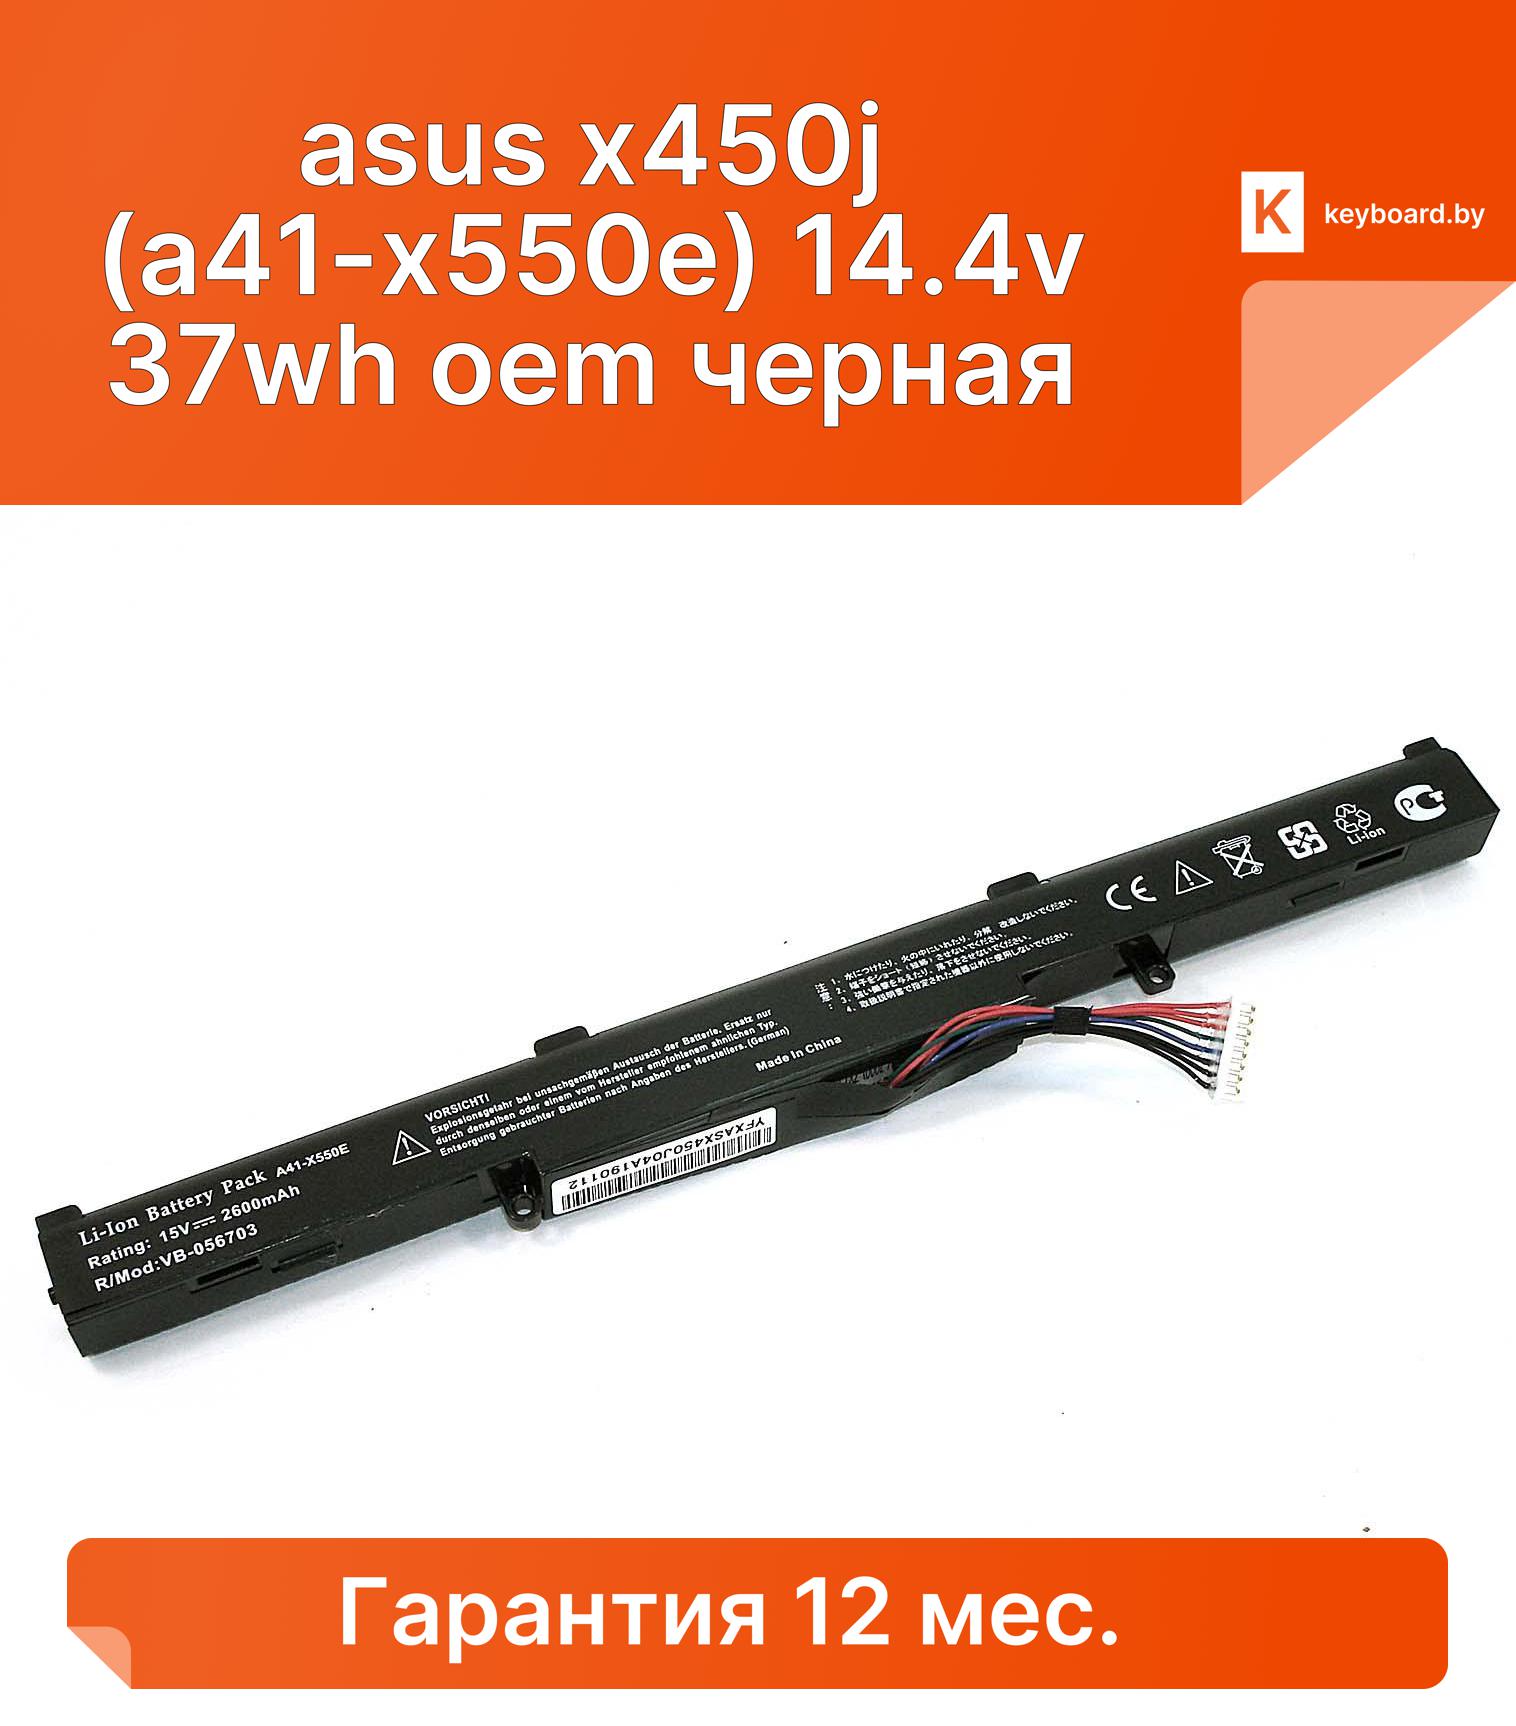 Аккумуляторная батарея для ноутбука asus x450j (a41-x550e) 14.4v 37wh oem черная